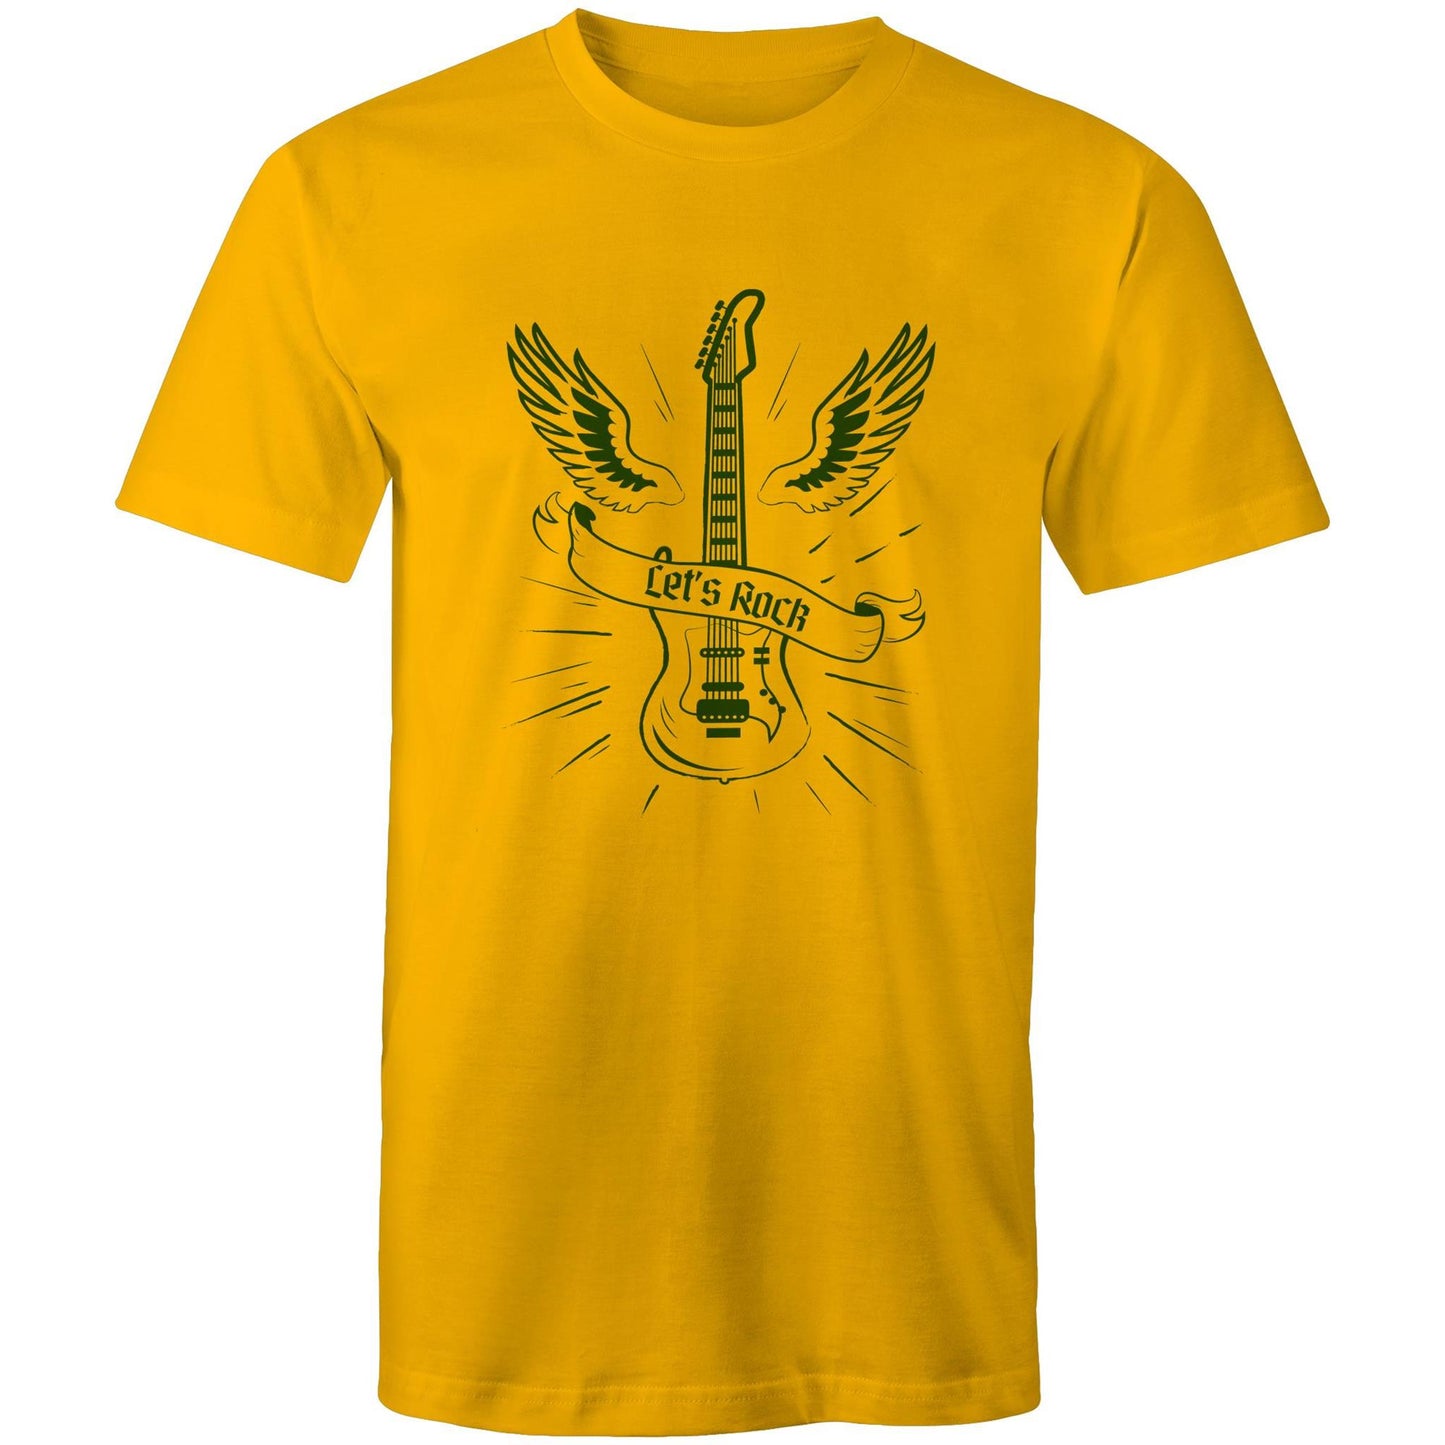 Let's Rock - Mens T-Shirt Gold Mens T-shirt Music